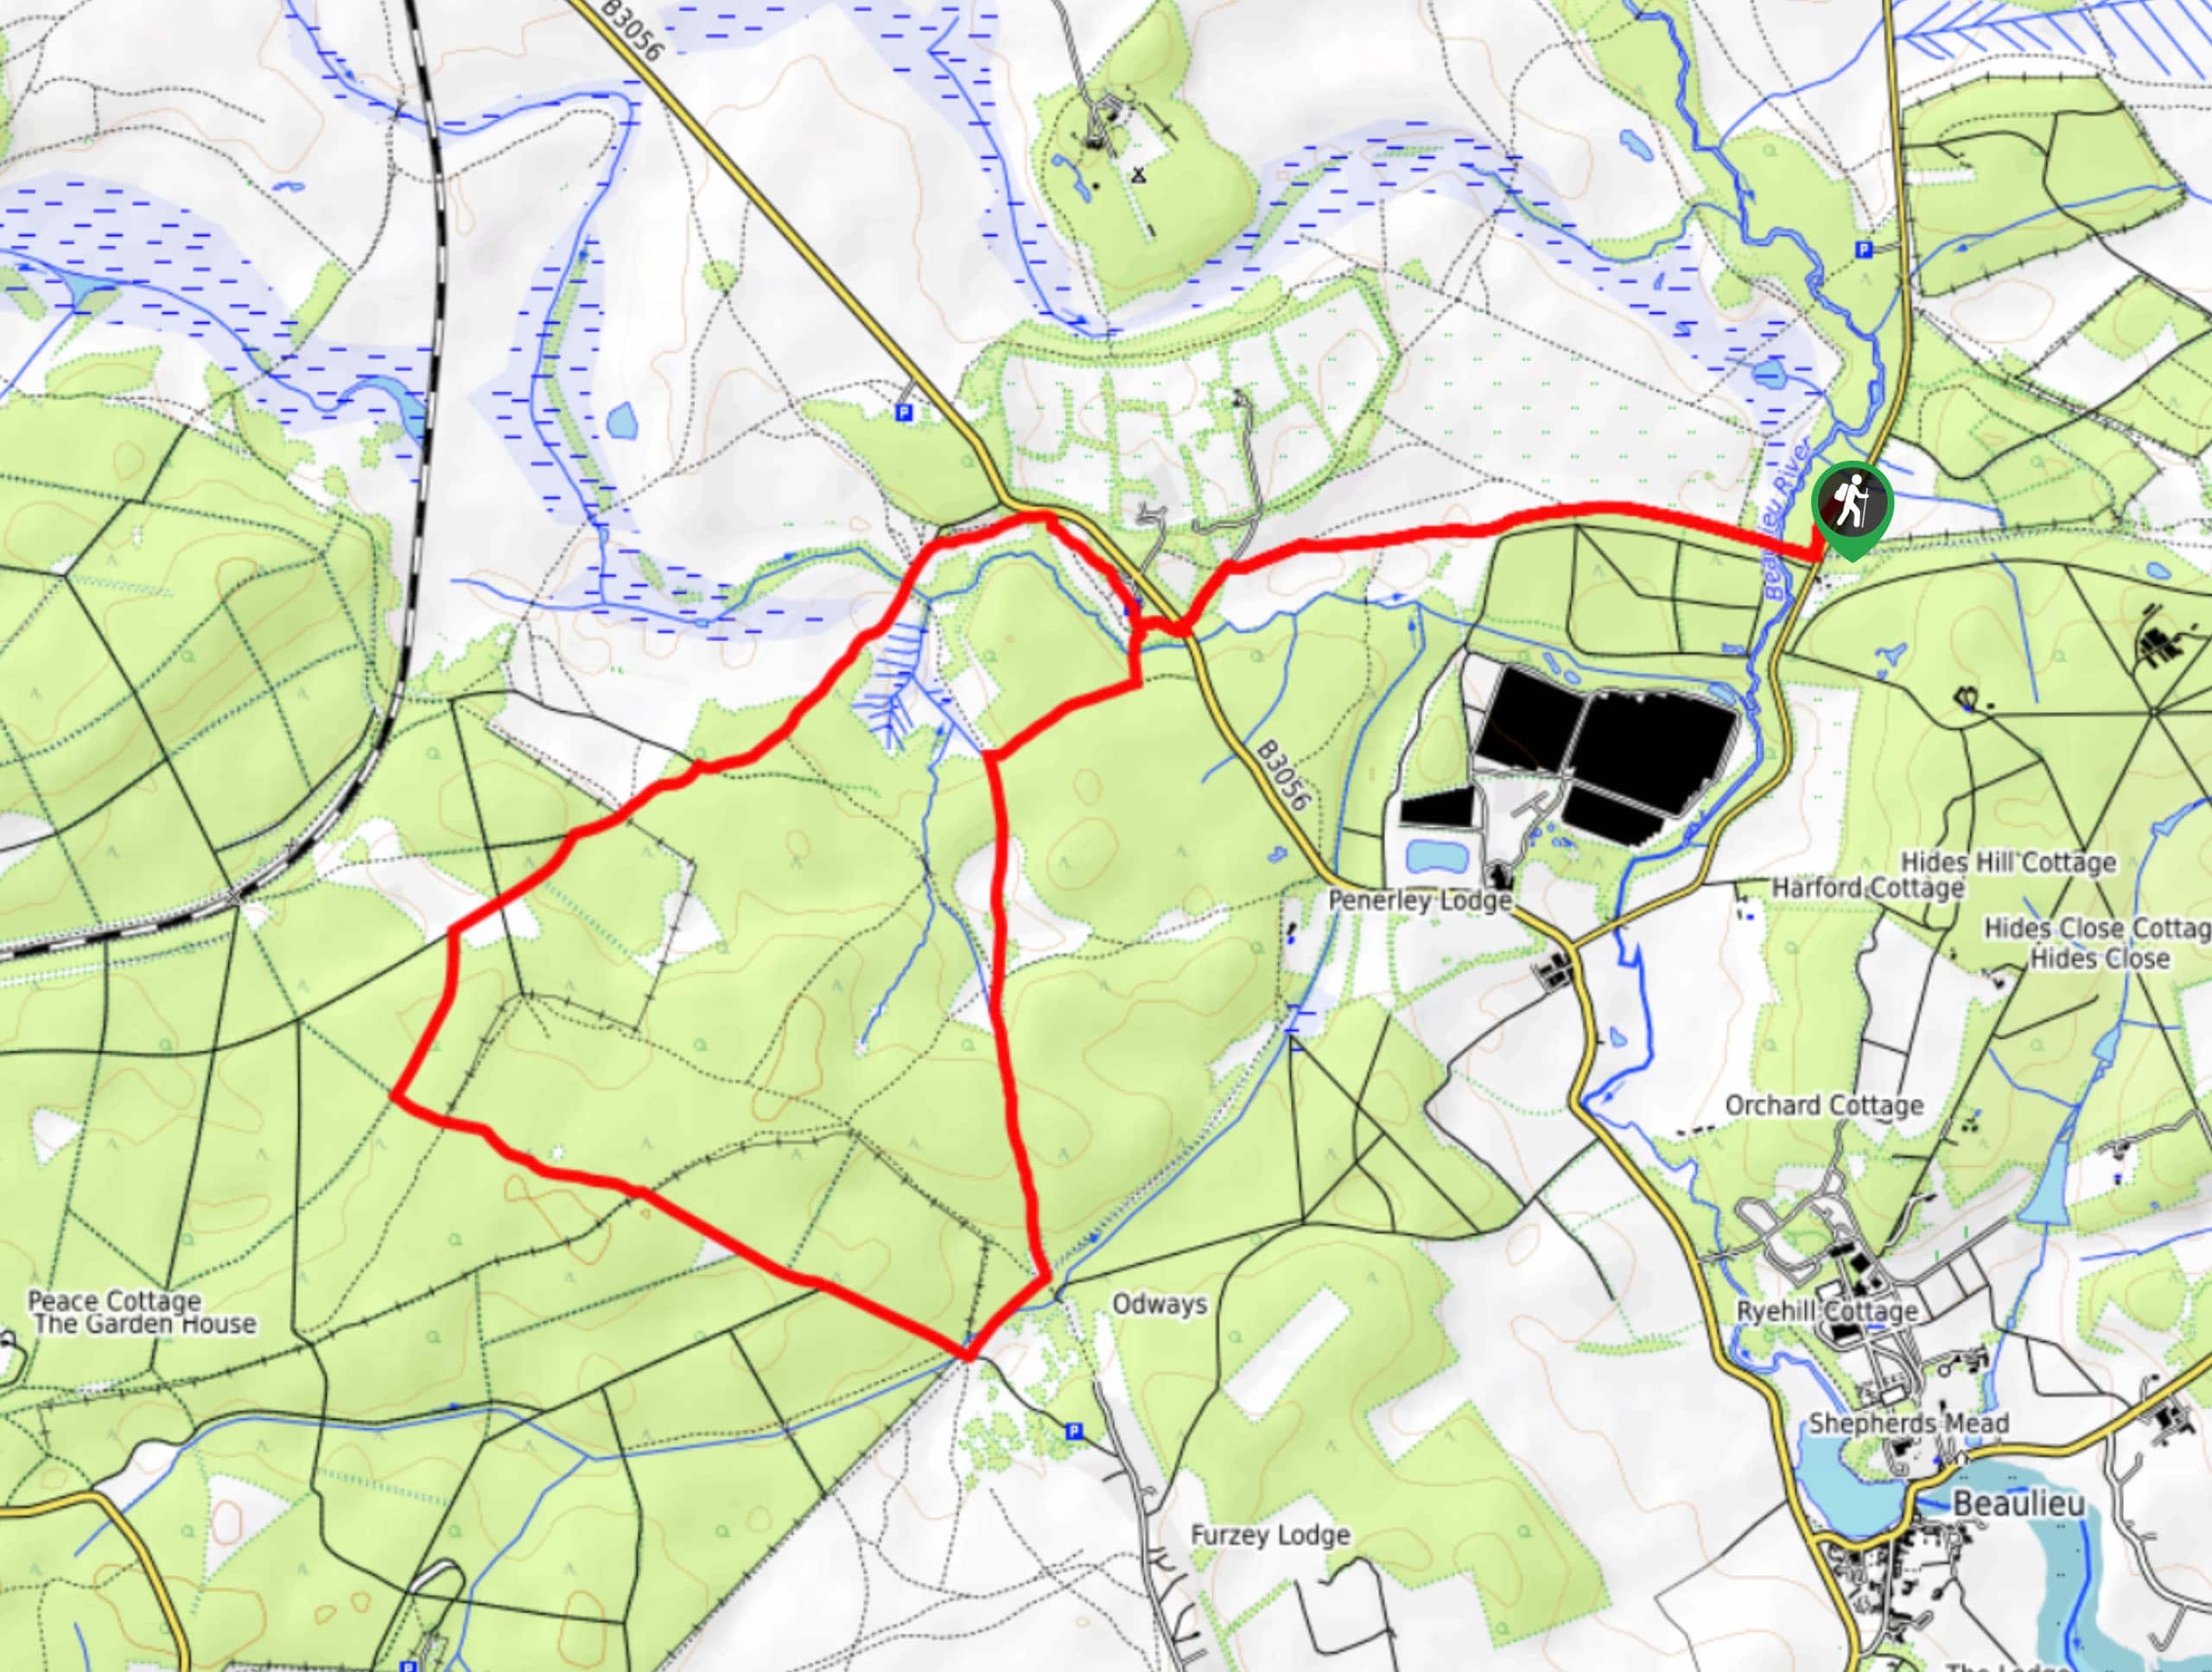 Penerley Wood and Moon Hill Circular Walk Map